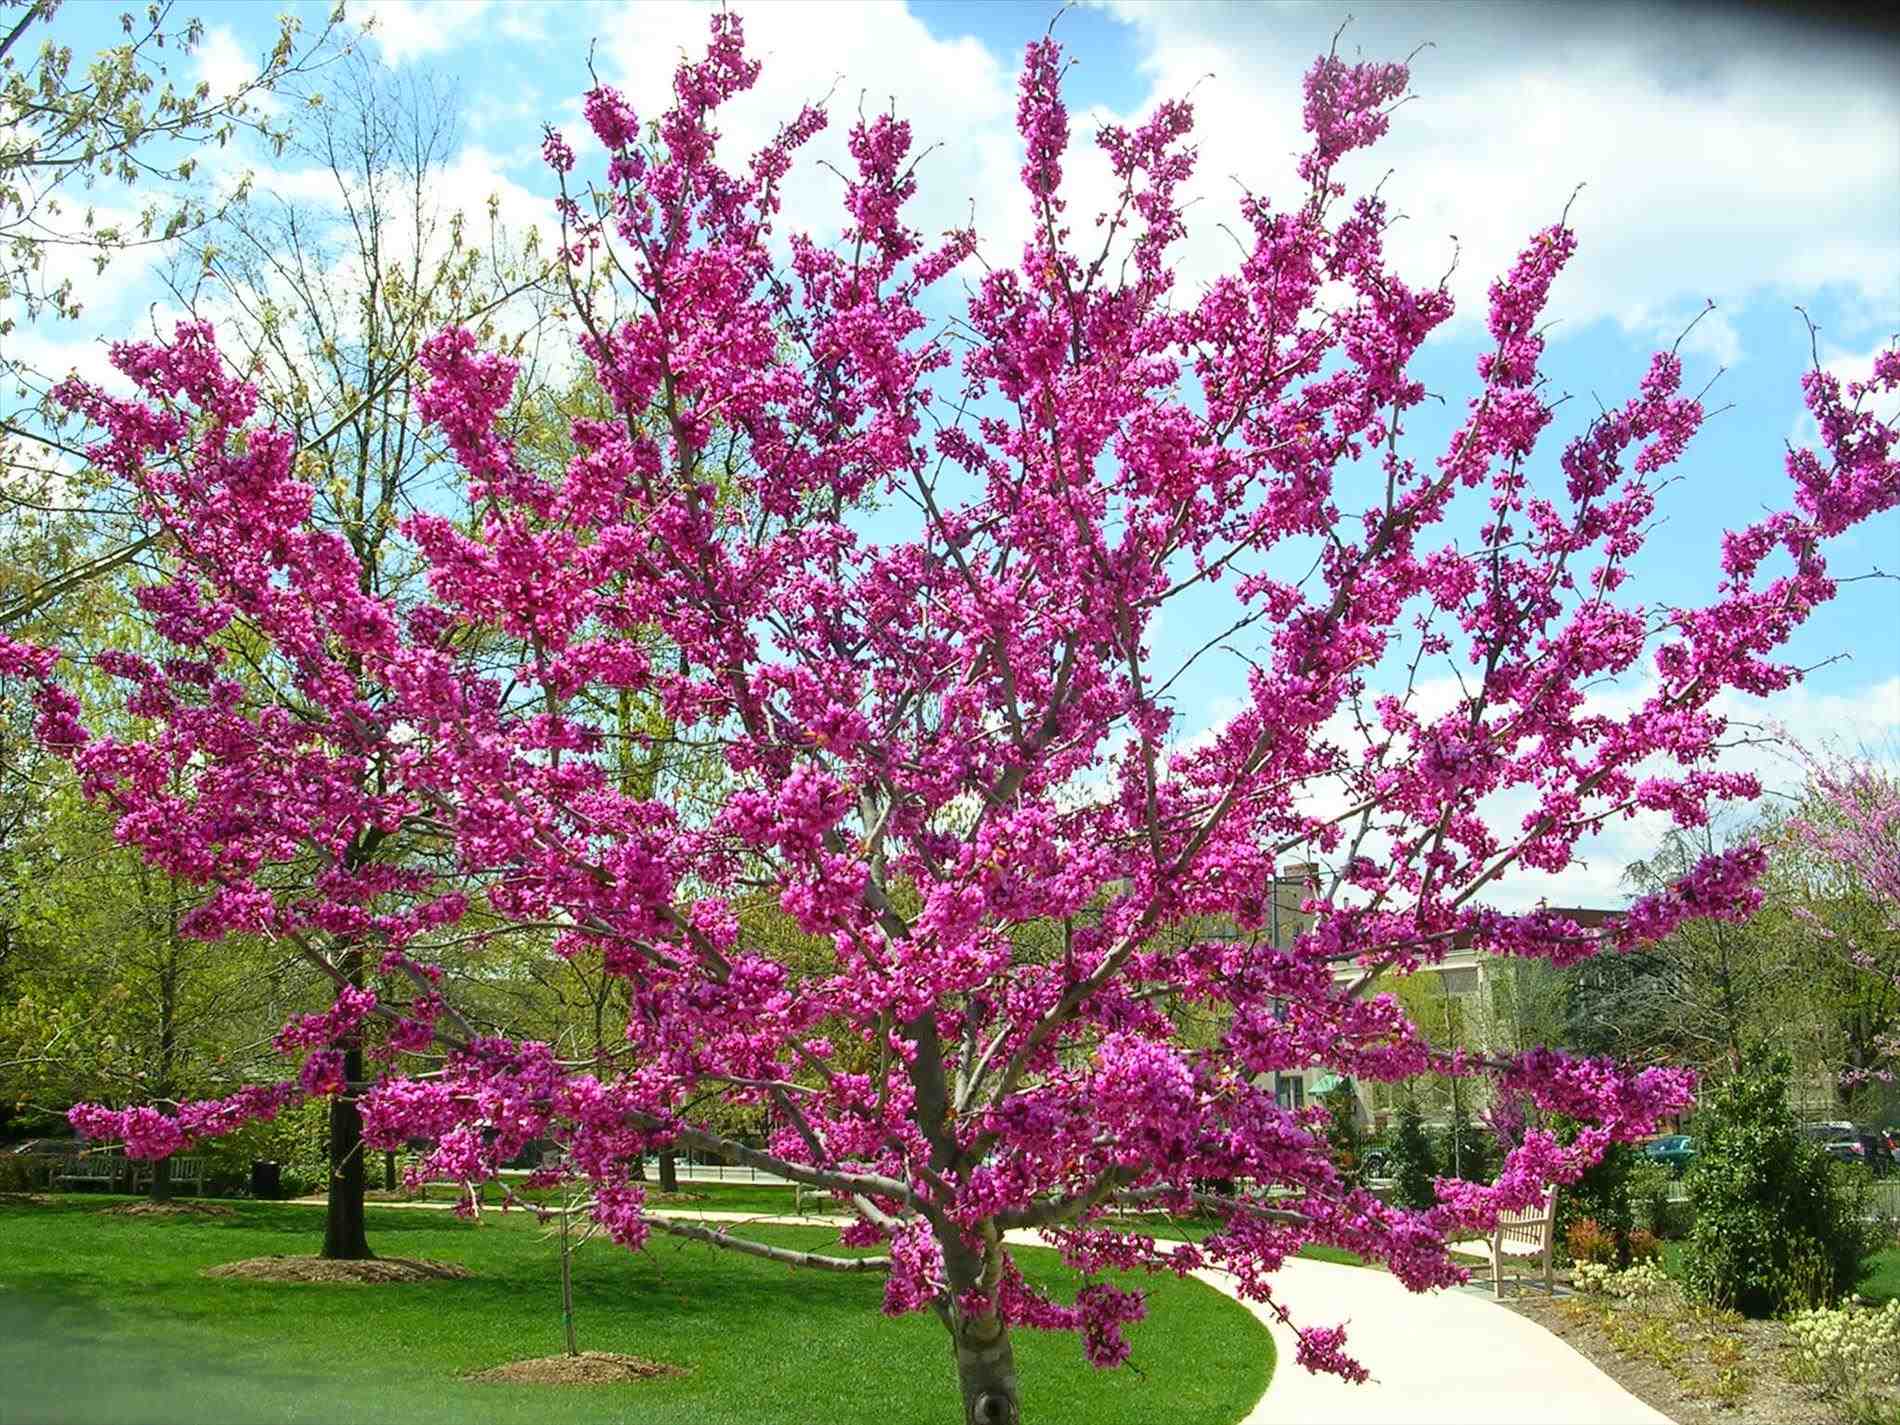 Eastern redbud tree with bright purple flowers